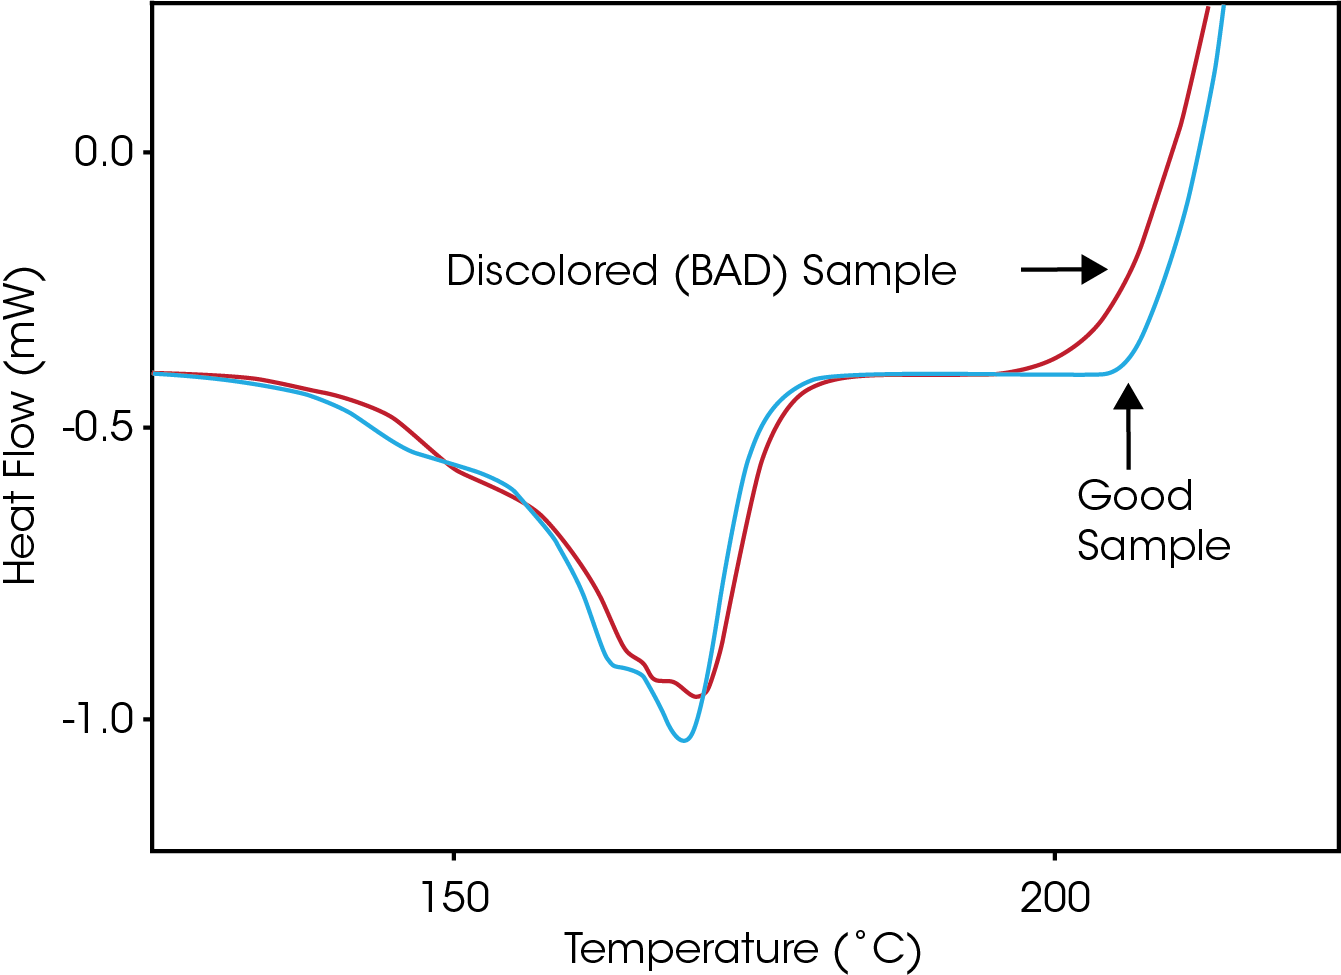 Figure 1. Dynamic oxidative stability